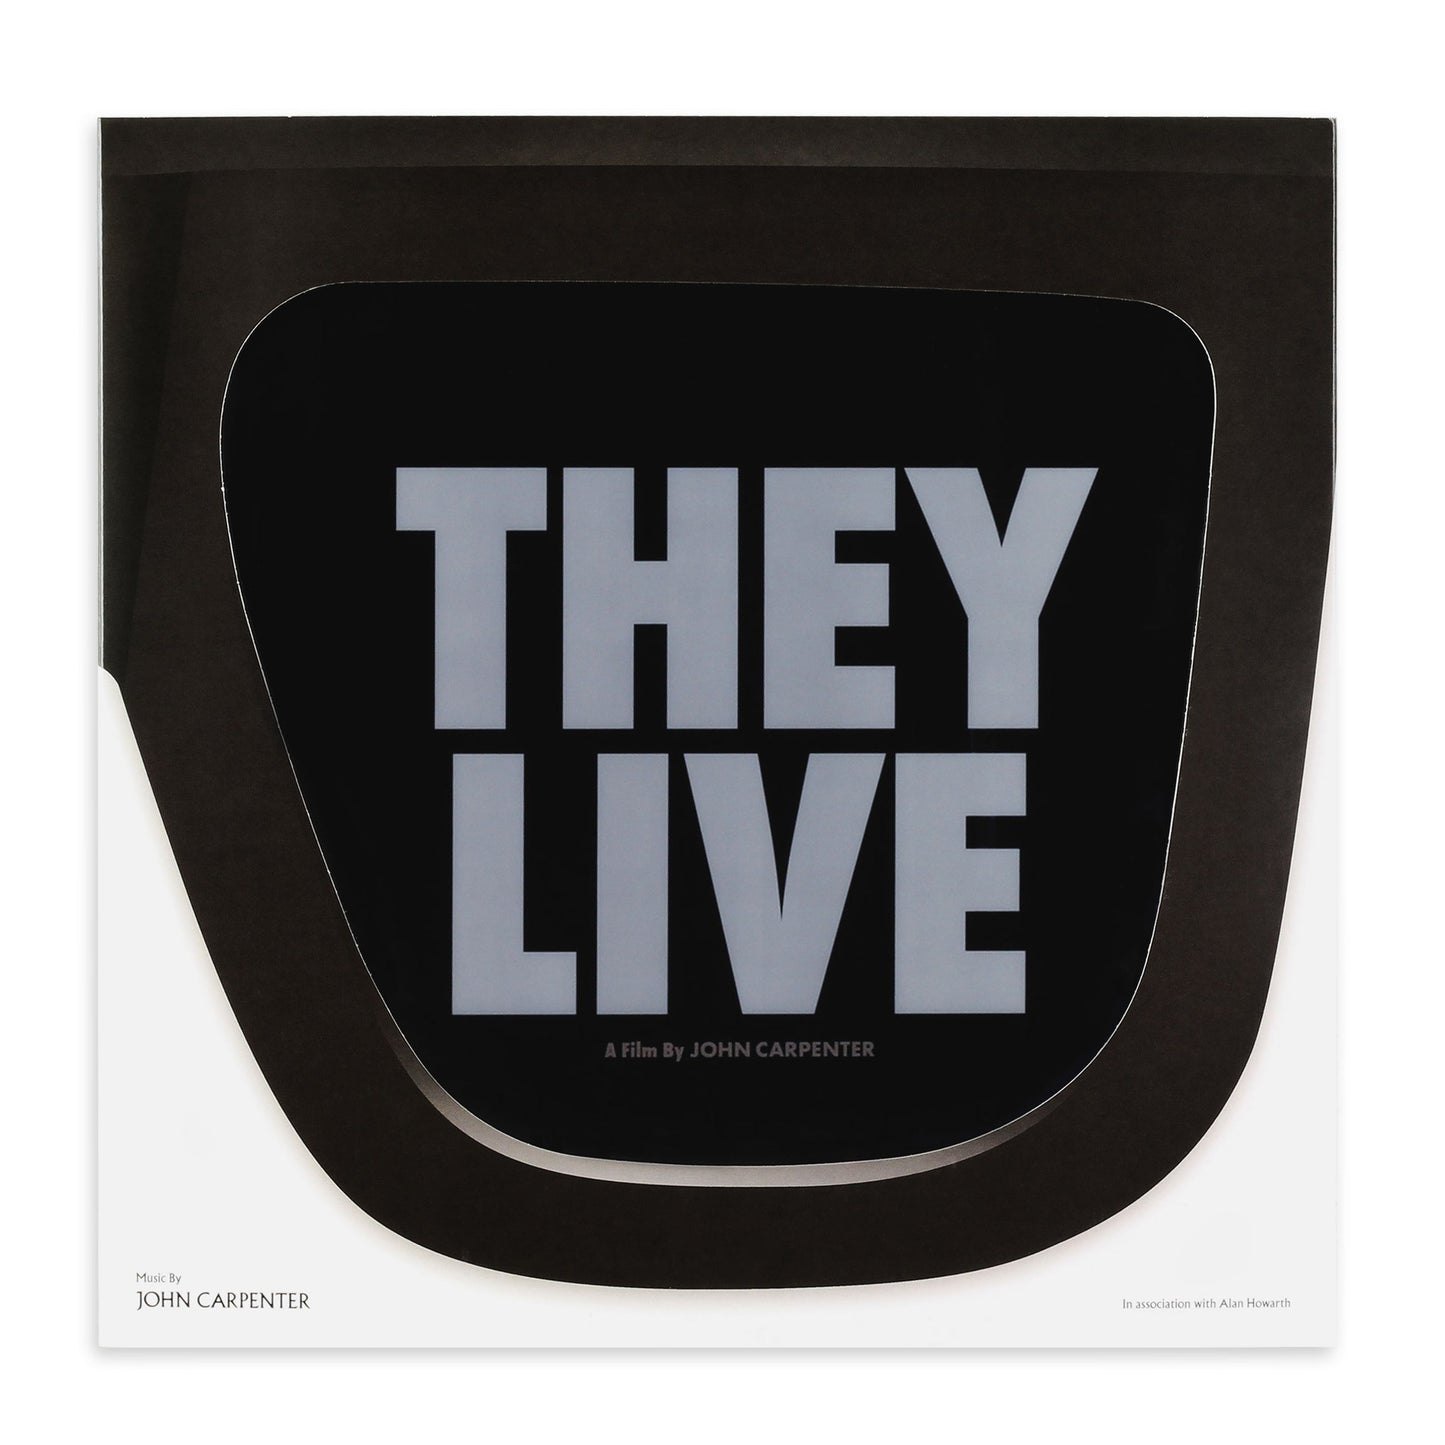 DW130 - John Carpenter - They Live (Original Motion Picture Soundtrack)